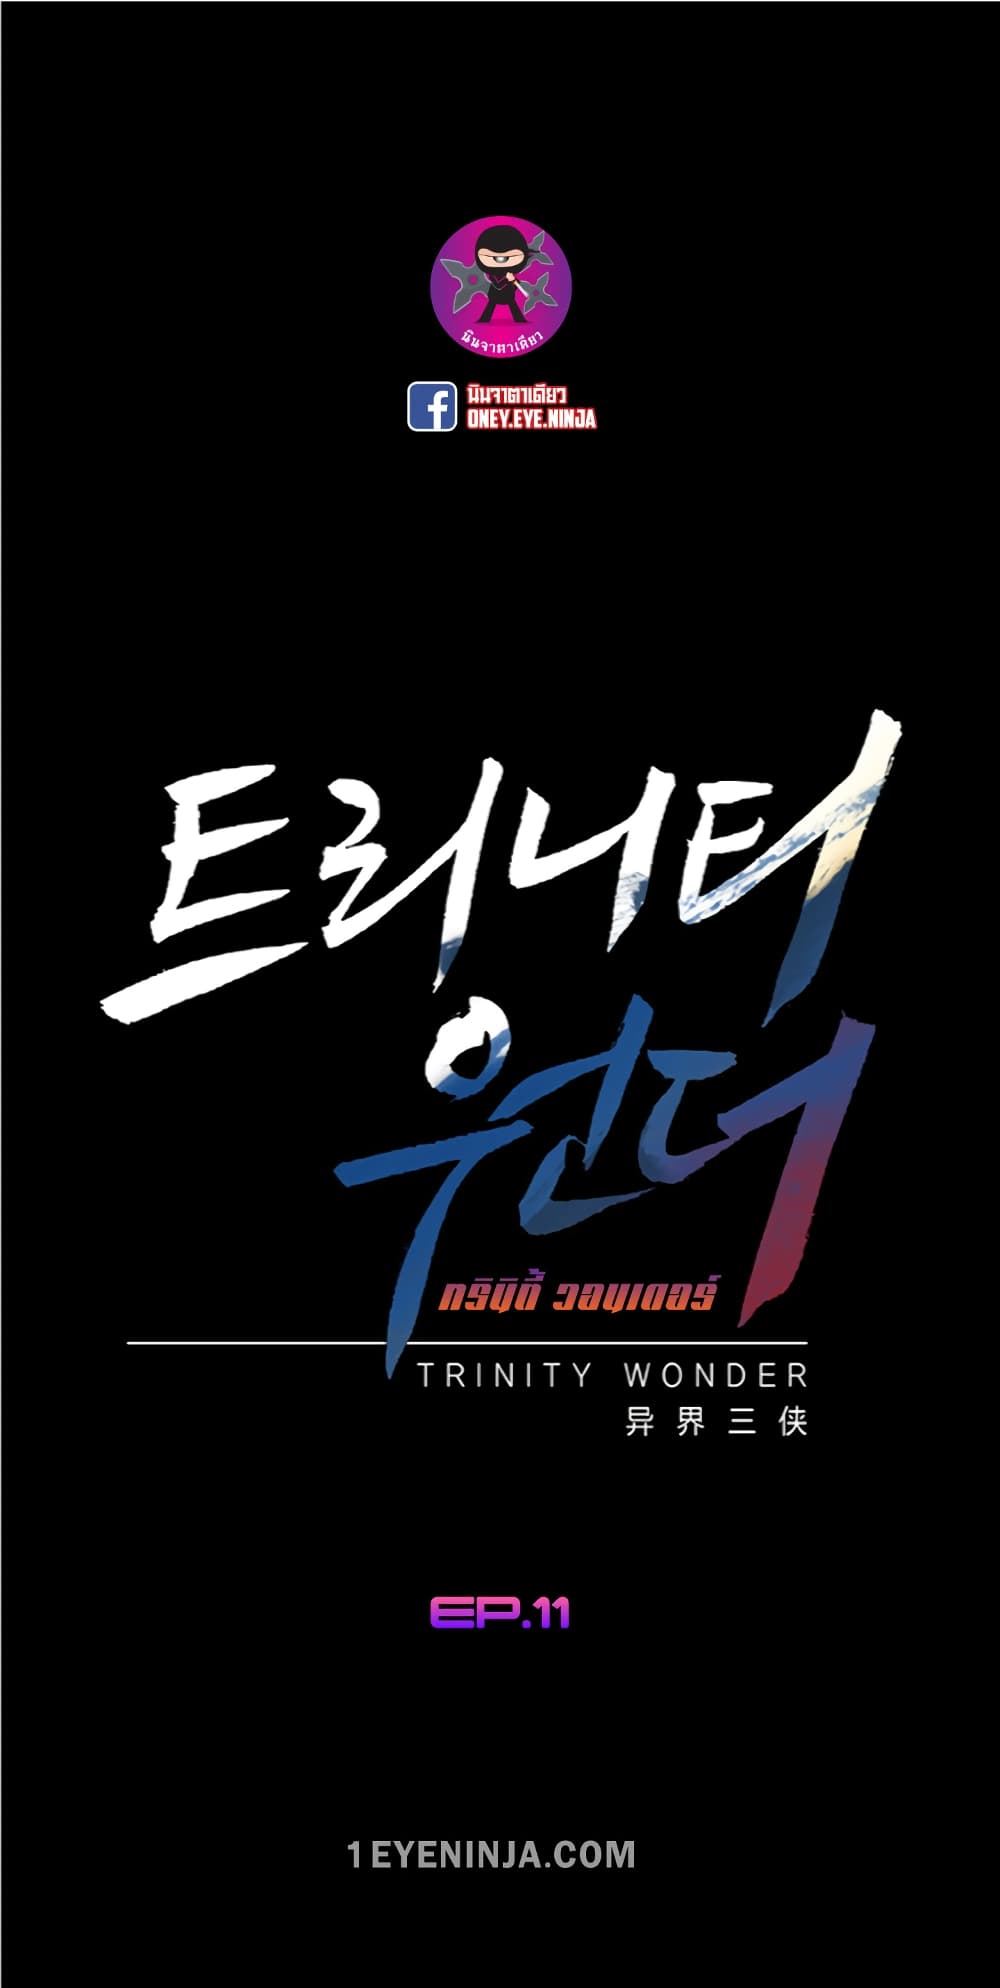 Trinity Wonder 11 (2)